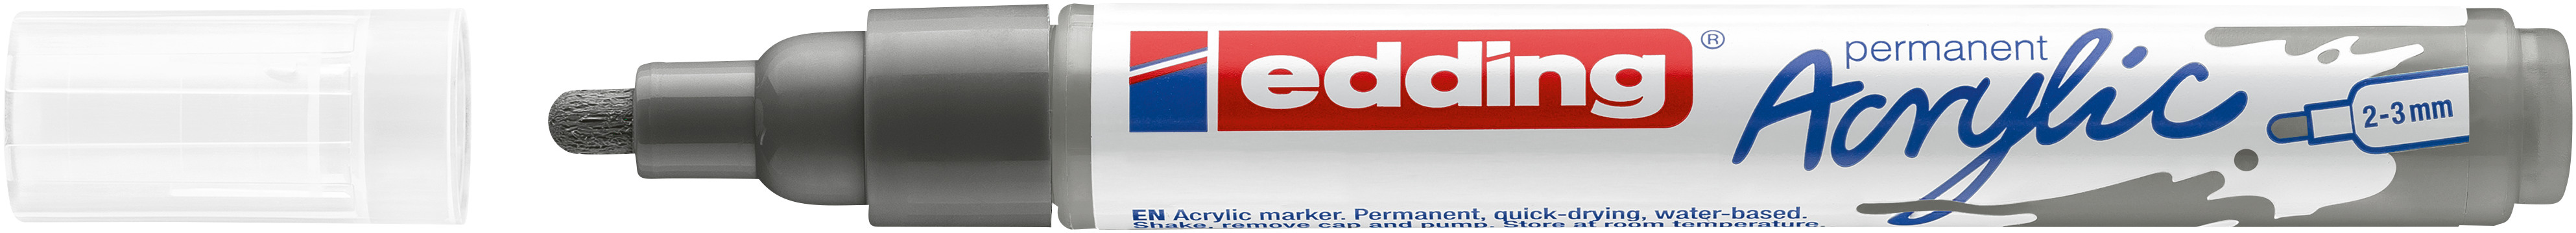 EDDING Acrylmarker 5100 2-3mm 5100-926 anthracite